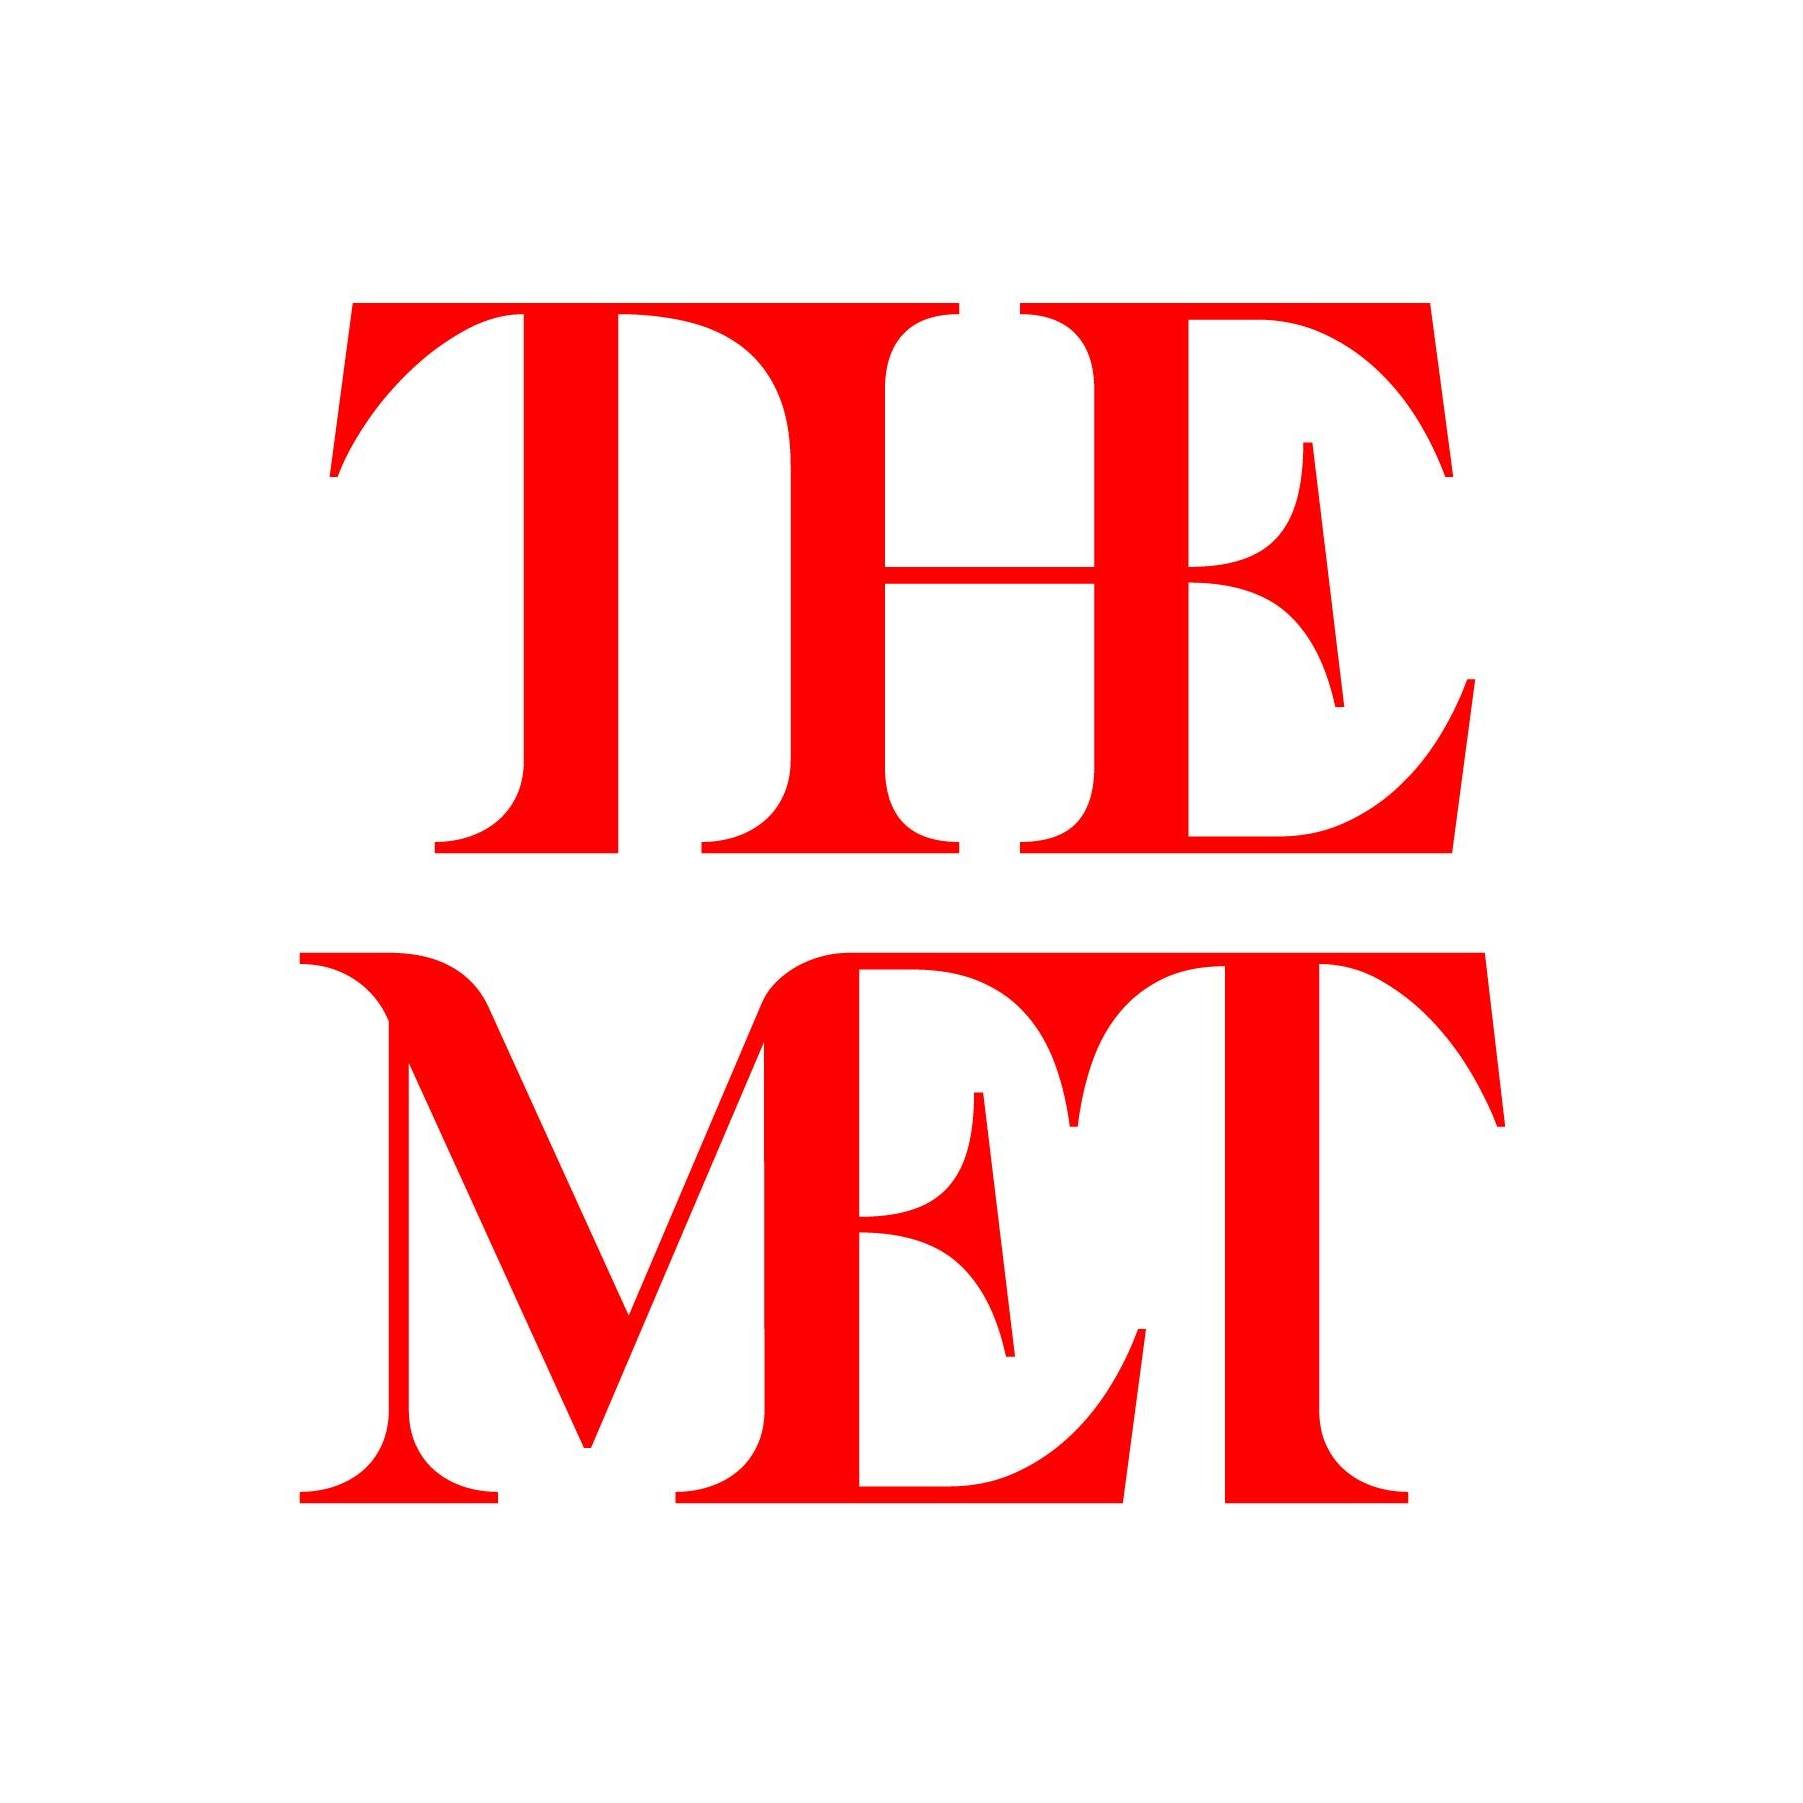 Company logo of The Metropolitan Museum of Art